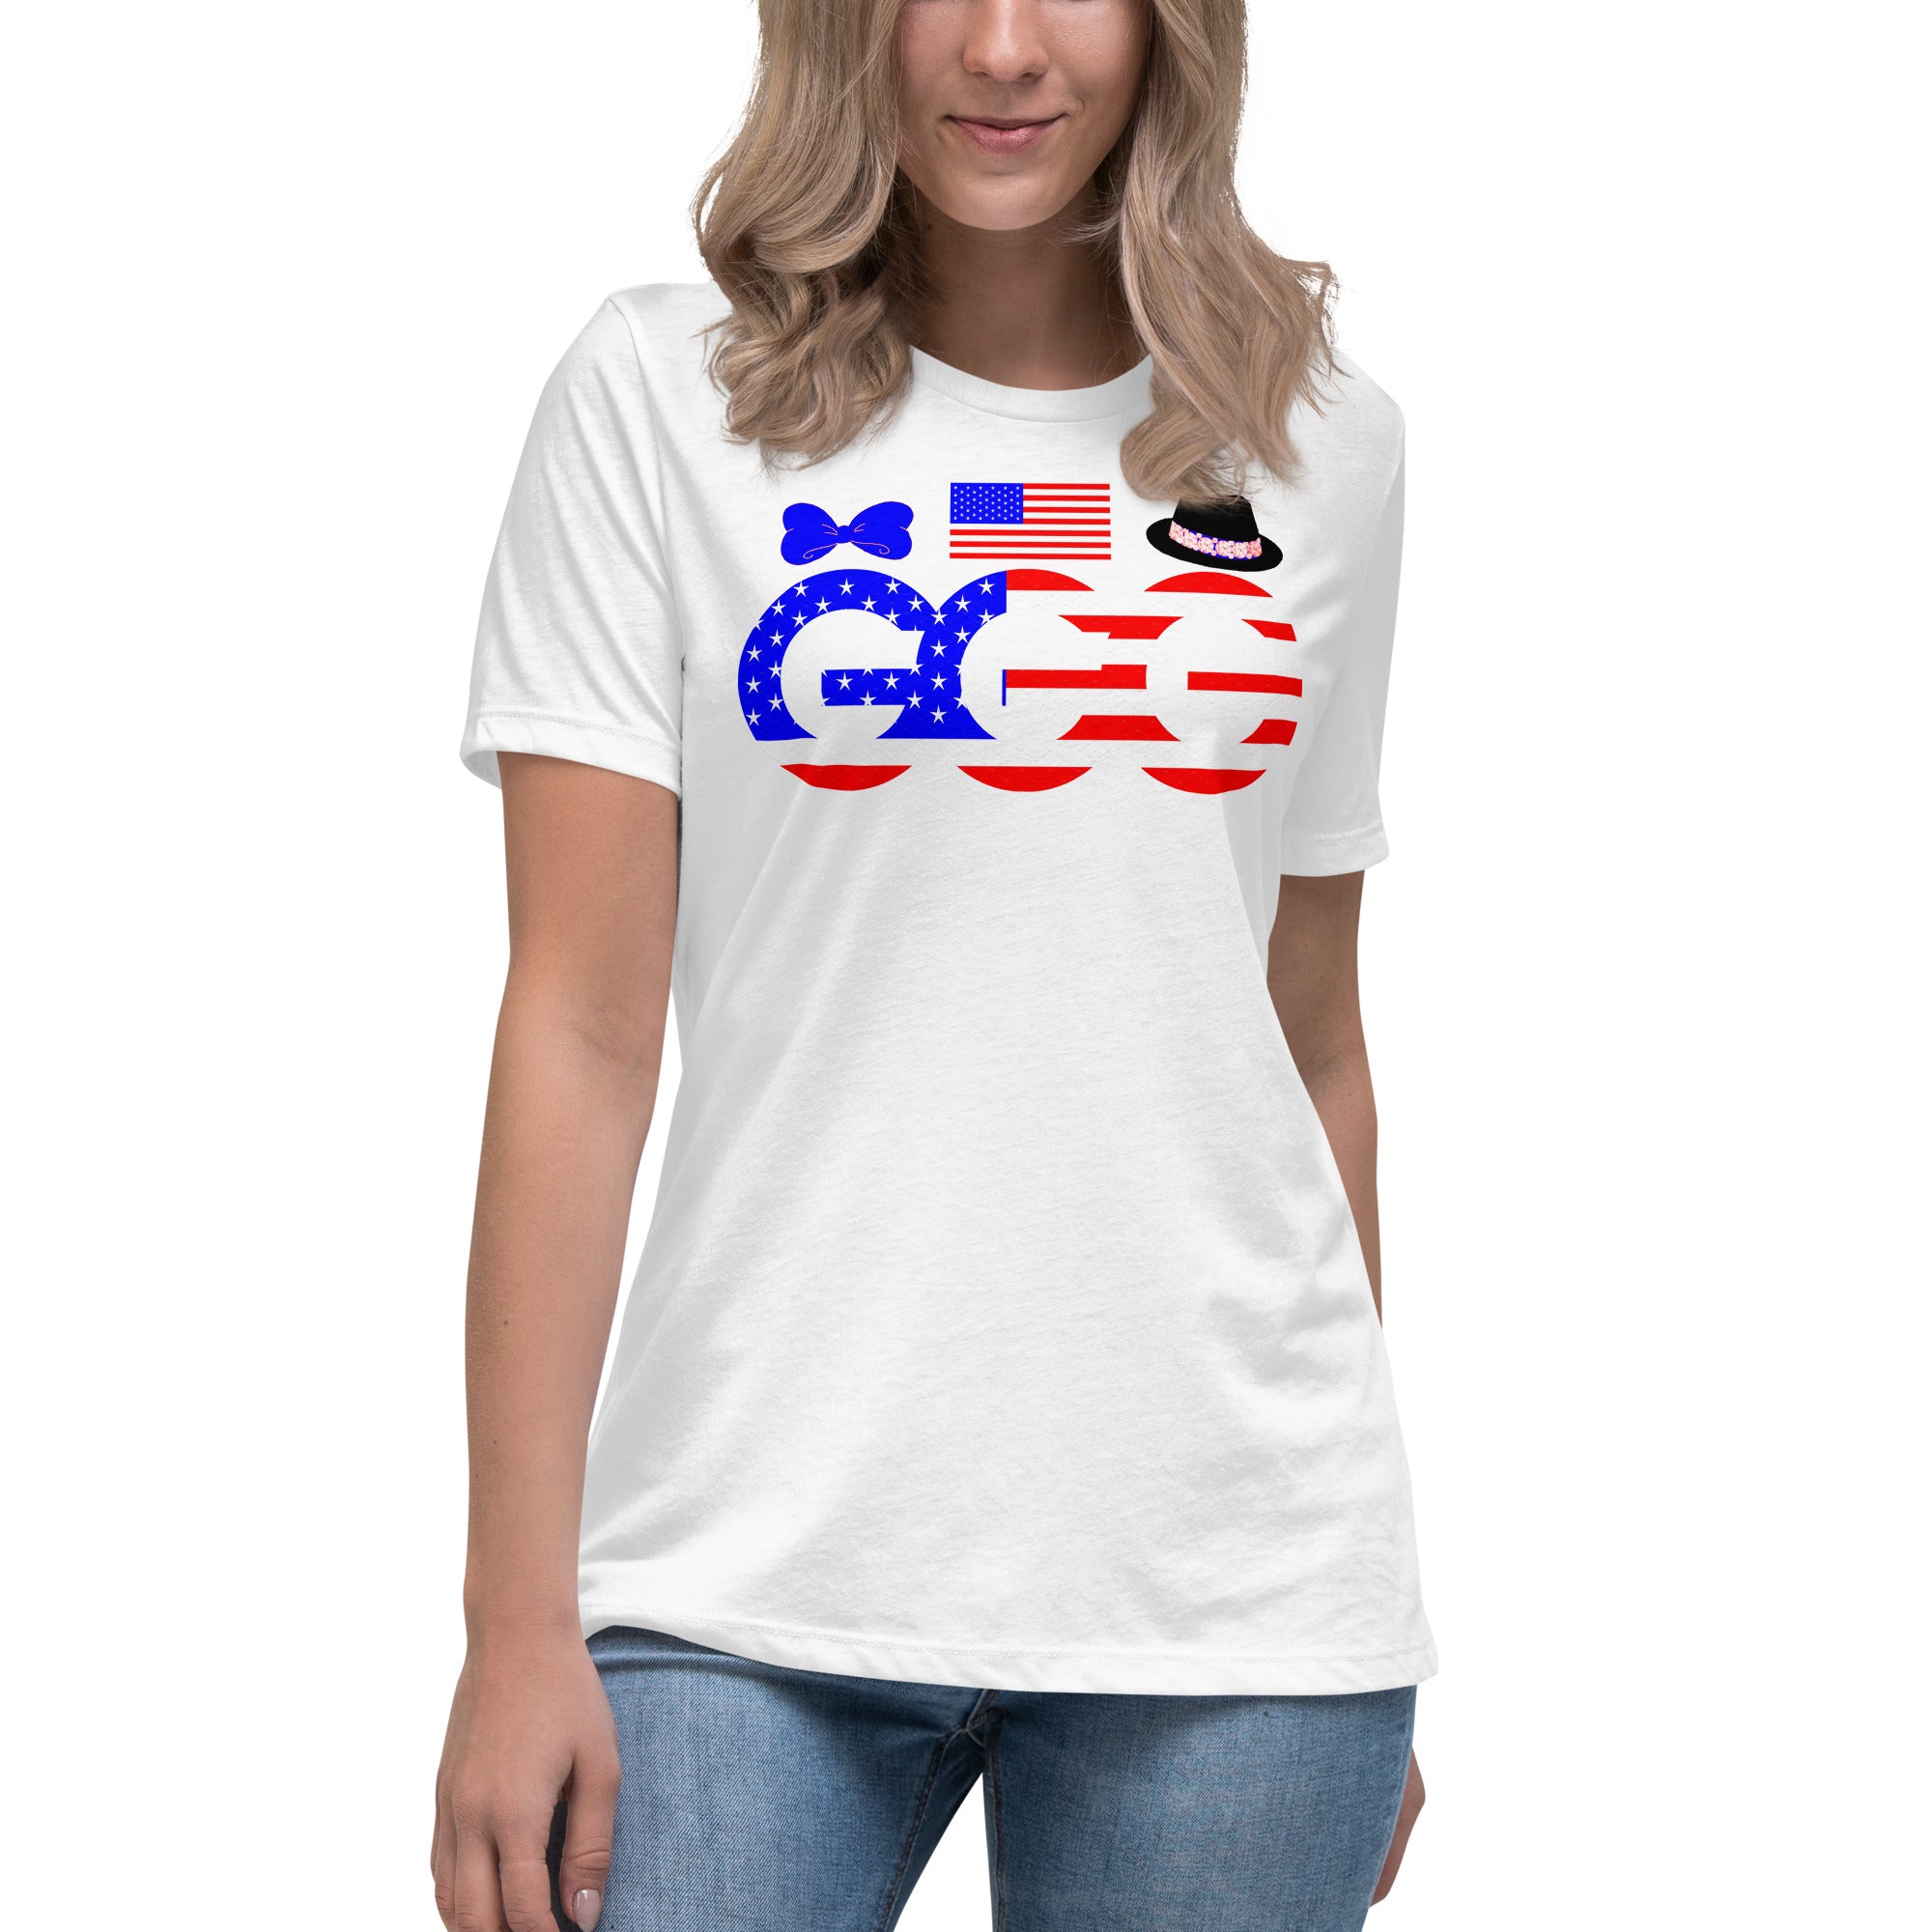 United States of America - G3 Culture